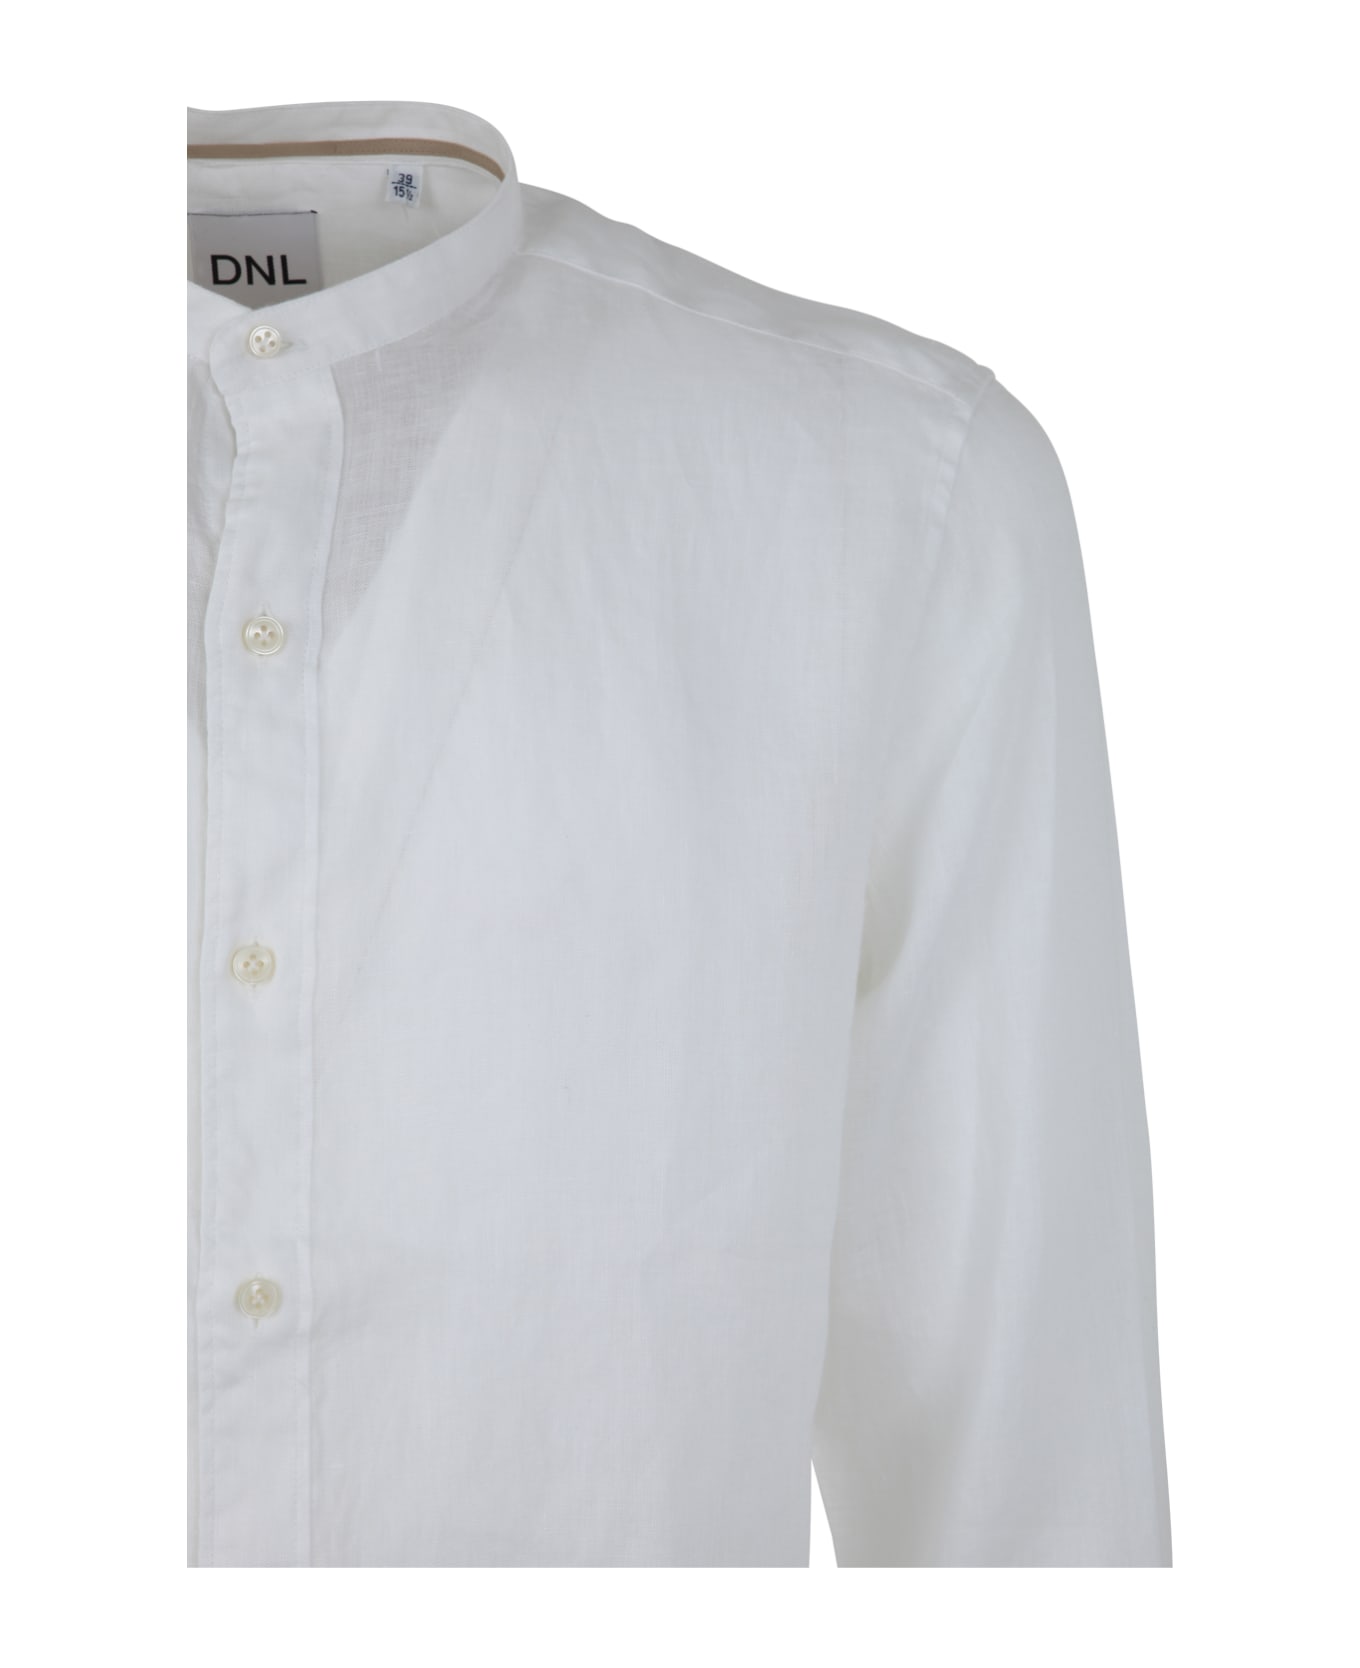 DNL Korean Neck Shirt - White